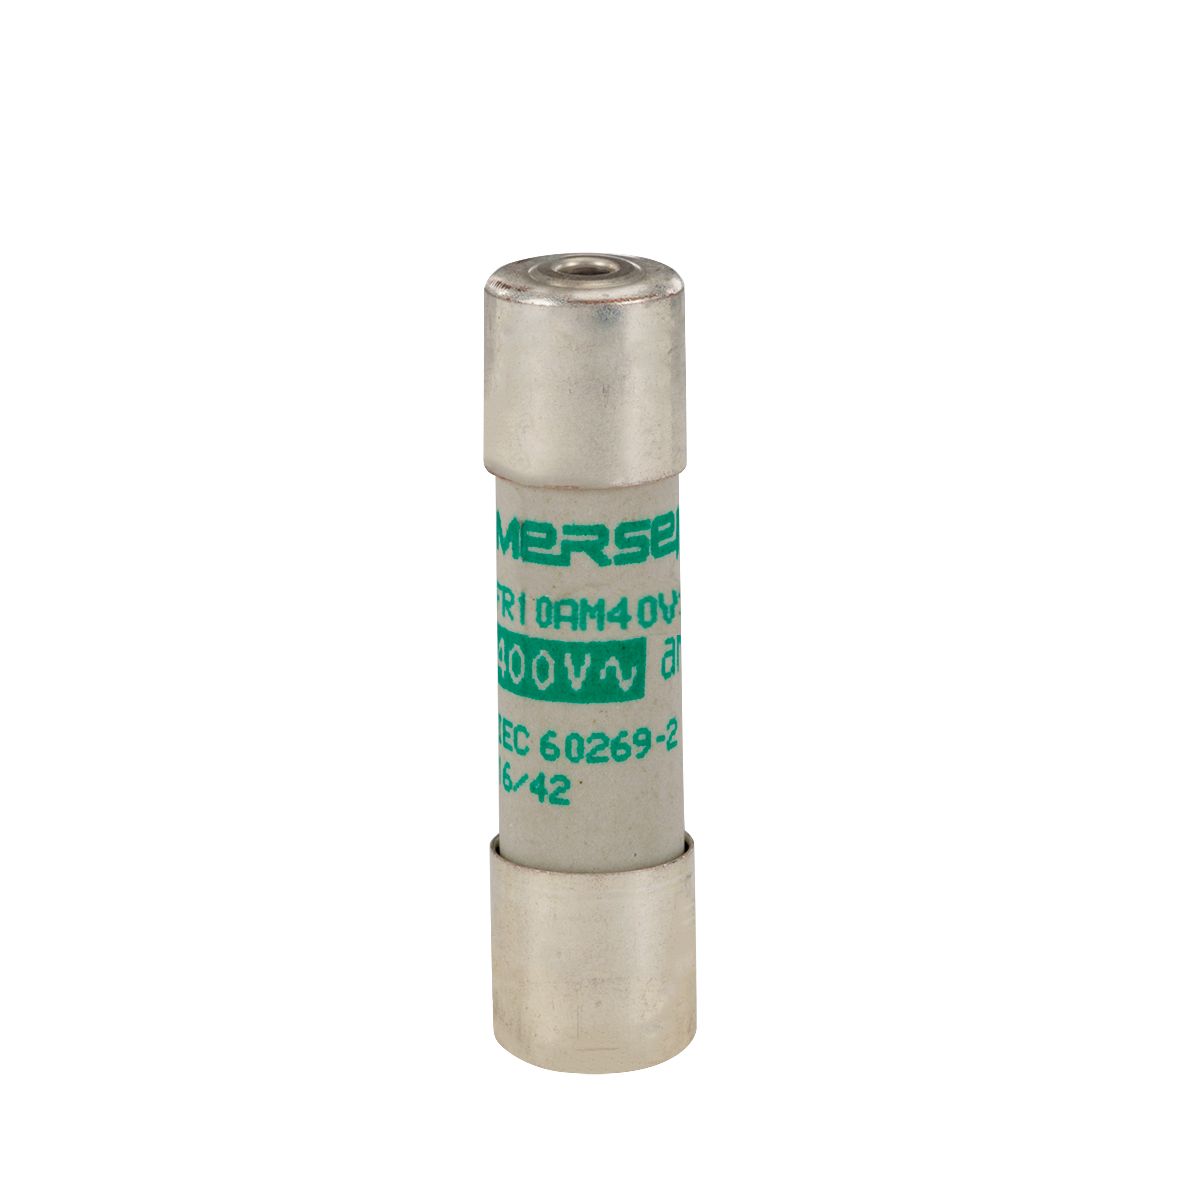 Y085259 - Cylindrical fuse-link aM 400VAC 10.3x38, 4A with striker